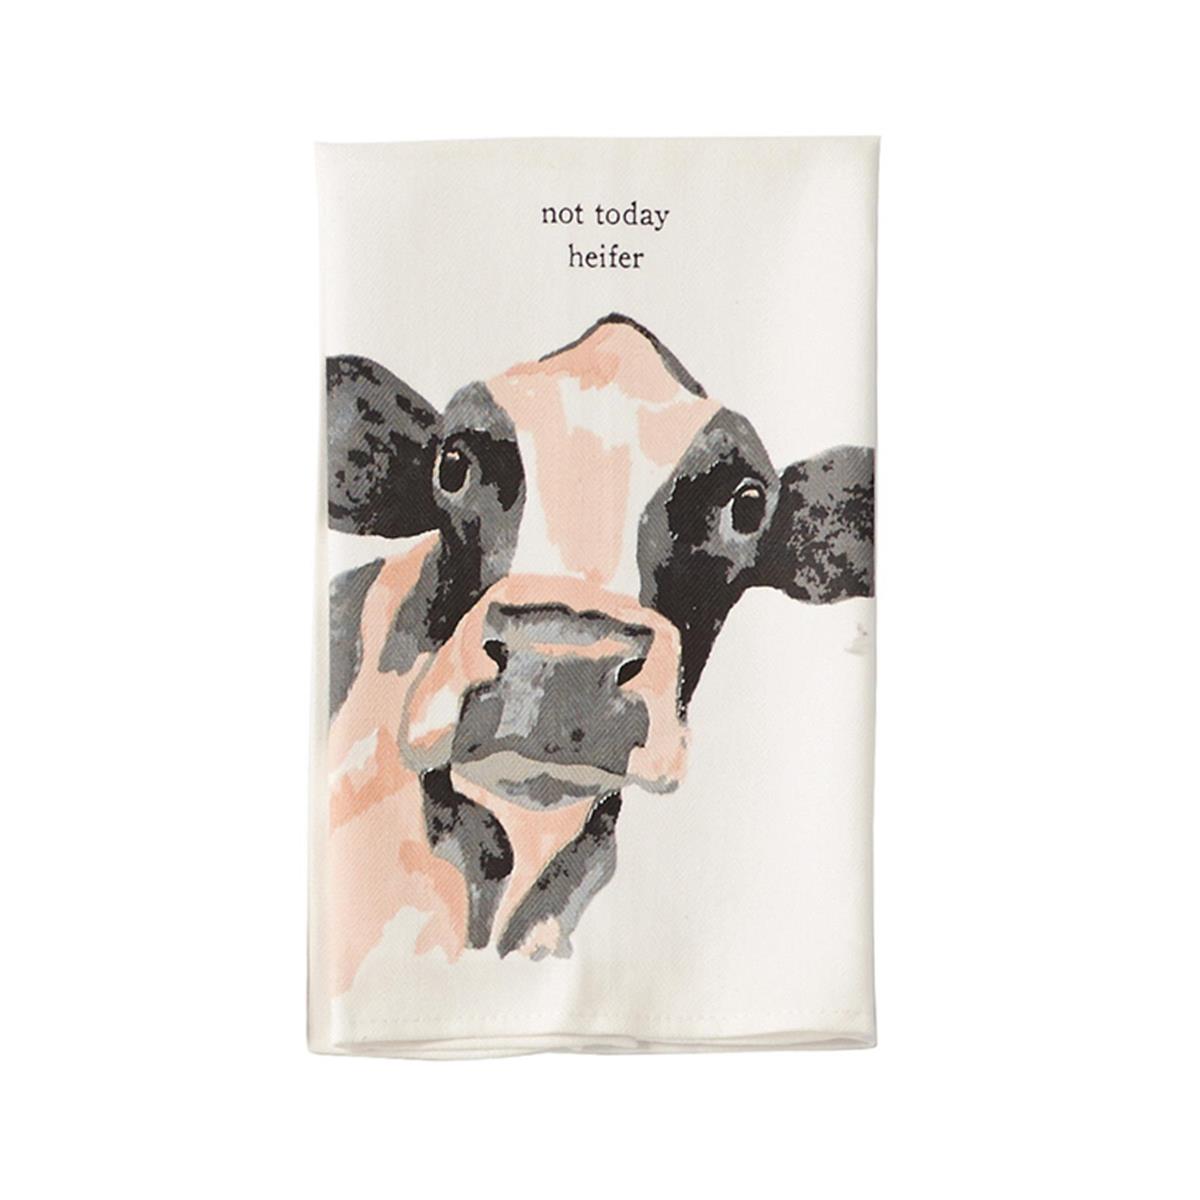 Watercolor Farm Animal Towels by Mud Pie